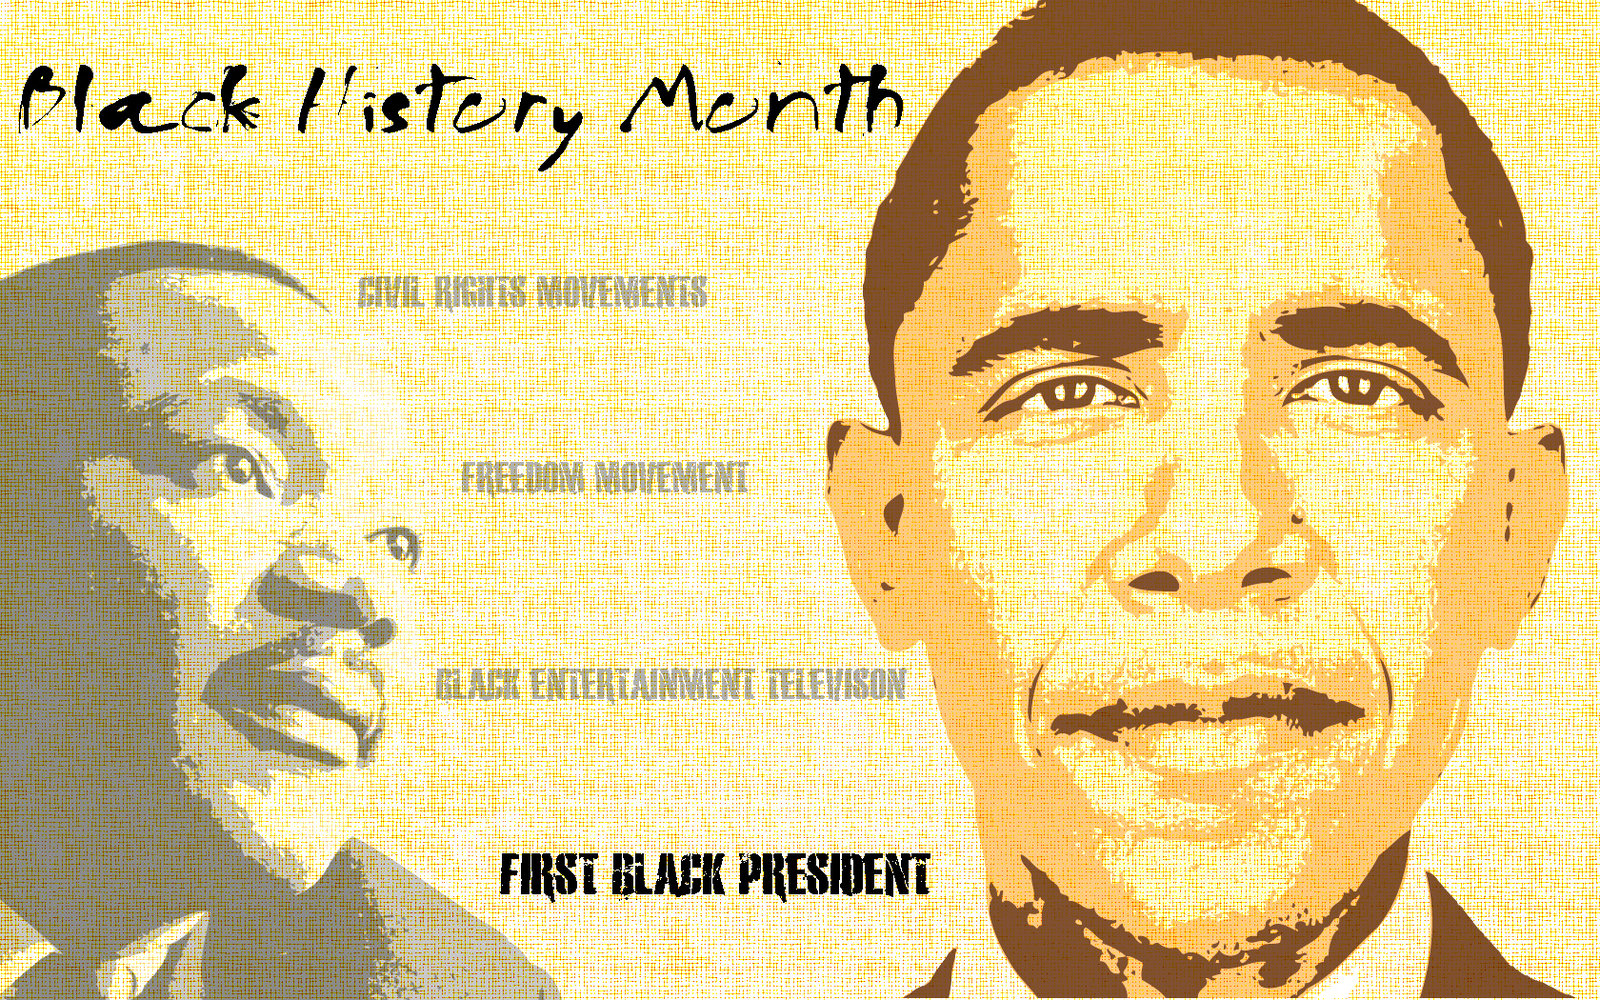 Black History Month Wallpaper